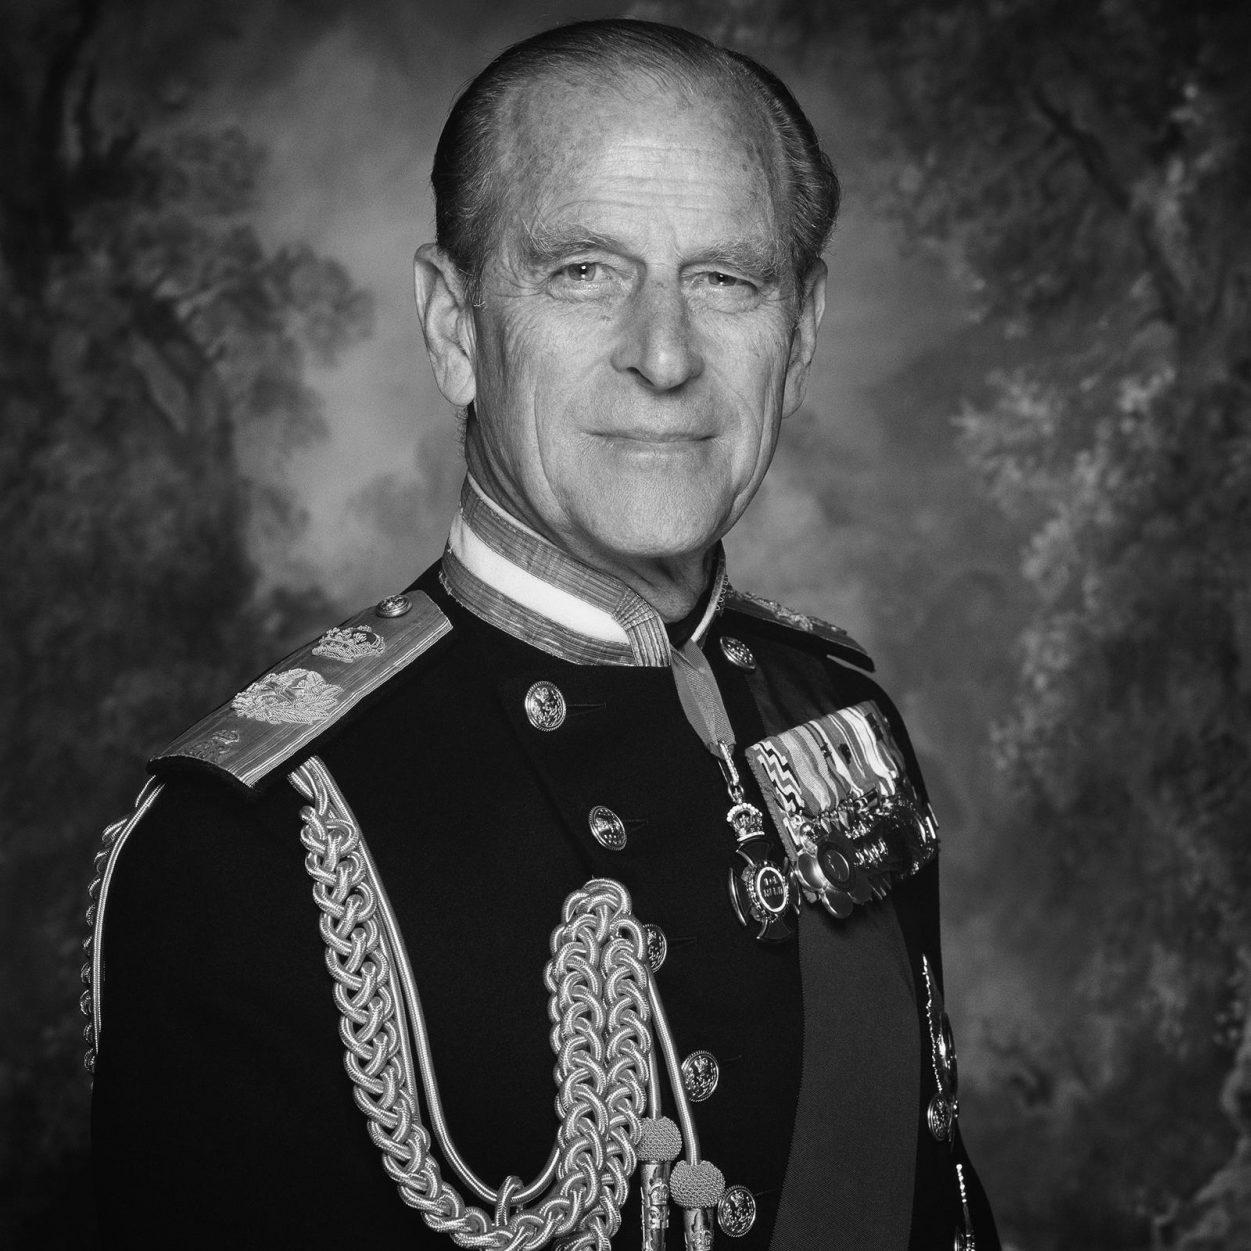 His Royal Highness Prince Philip, Duke of Edinburgh